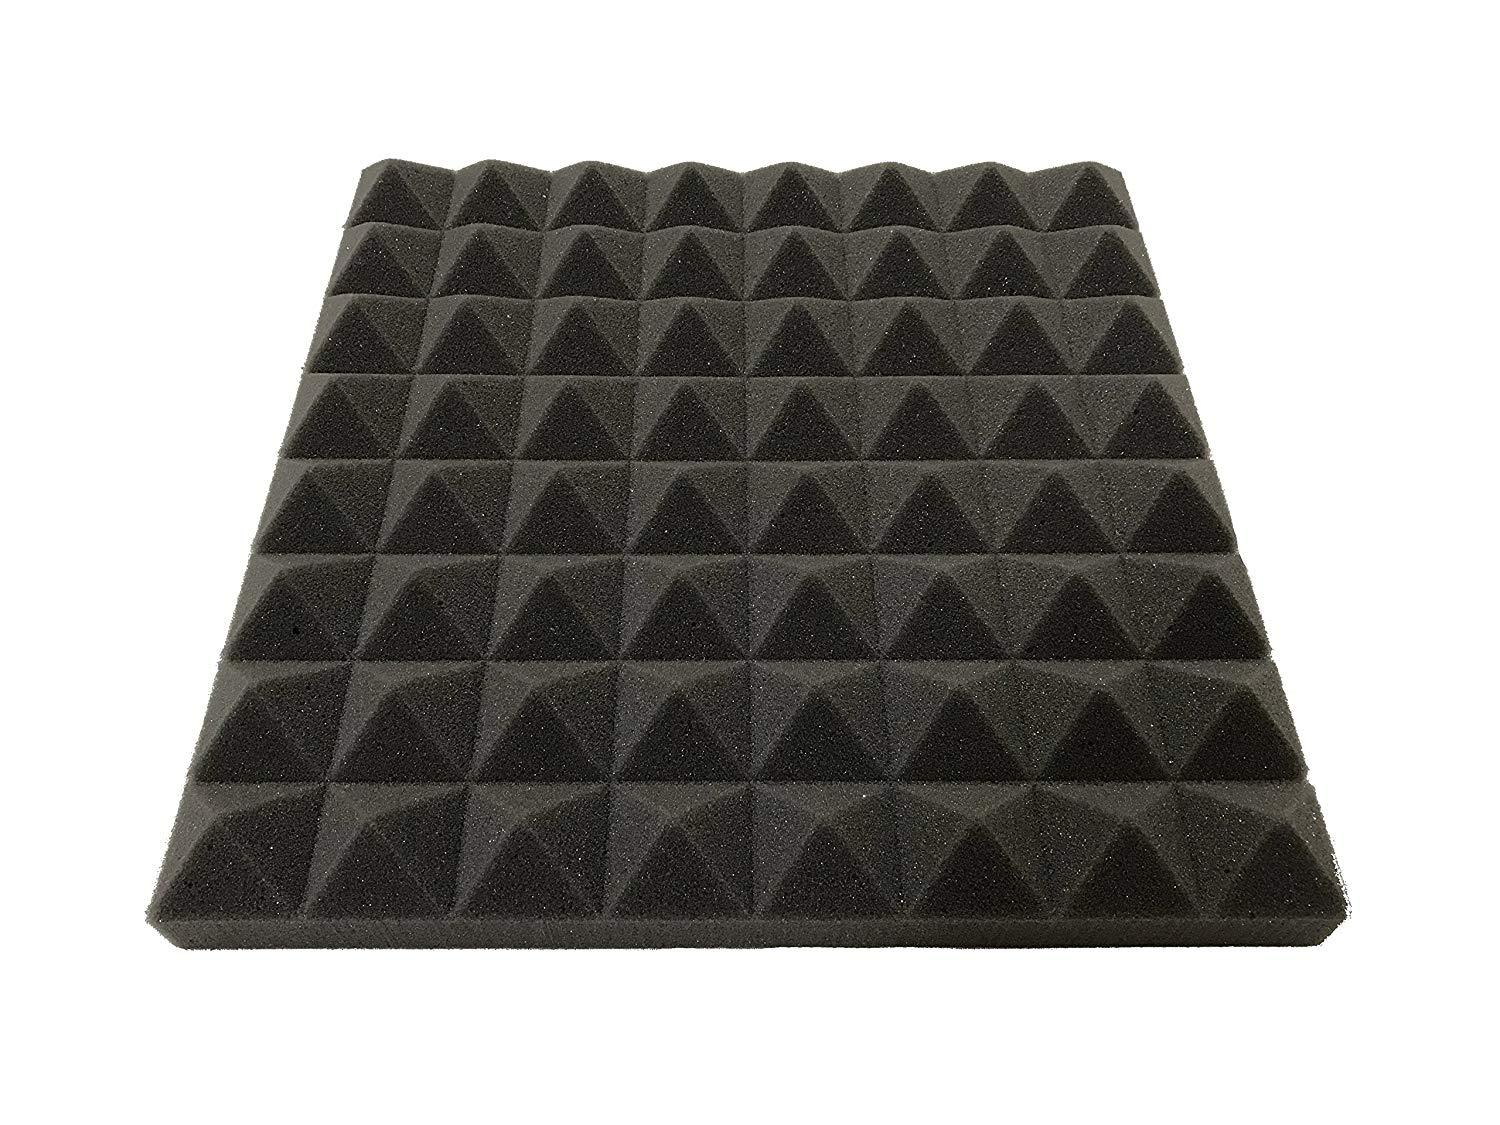 Pyramid 12" Acoustic Studio Foam Tile Pack - Advanced Acoustics